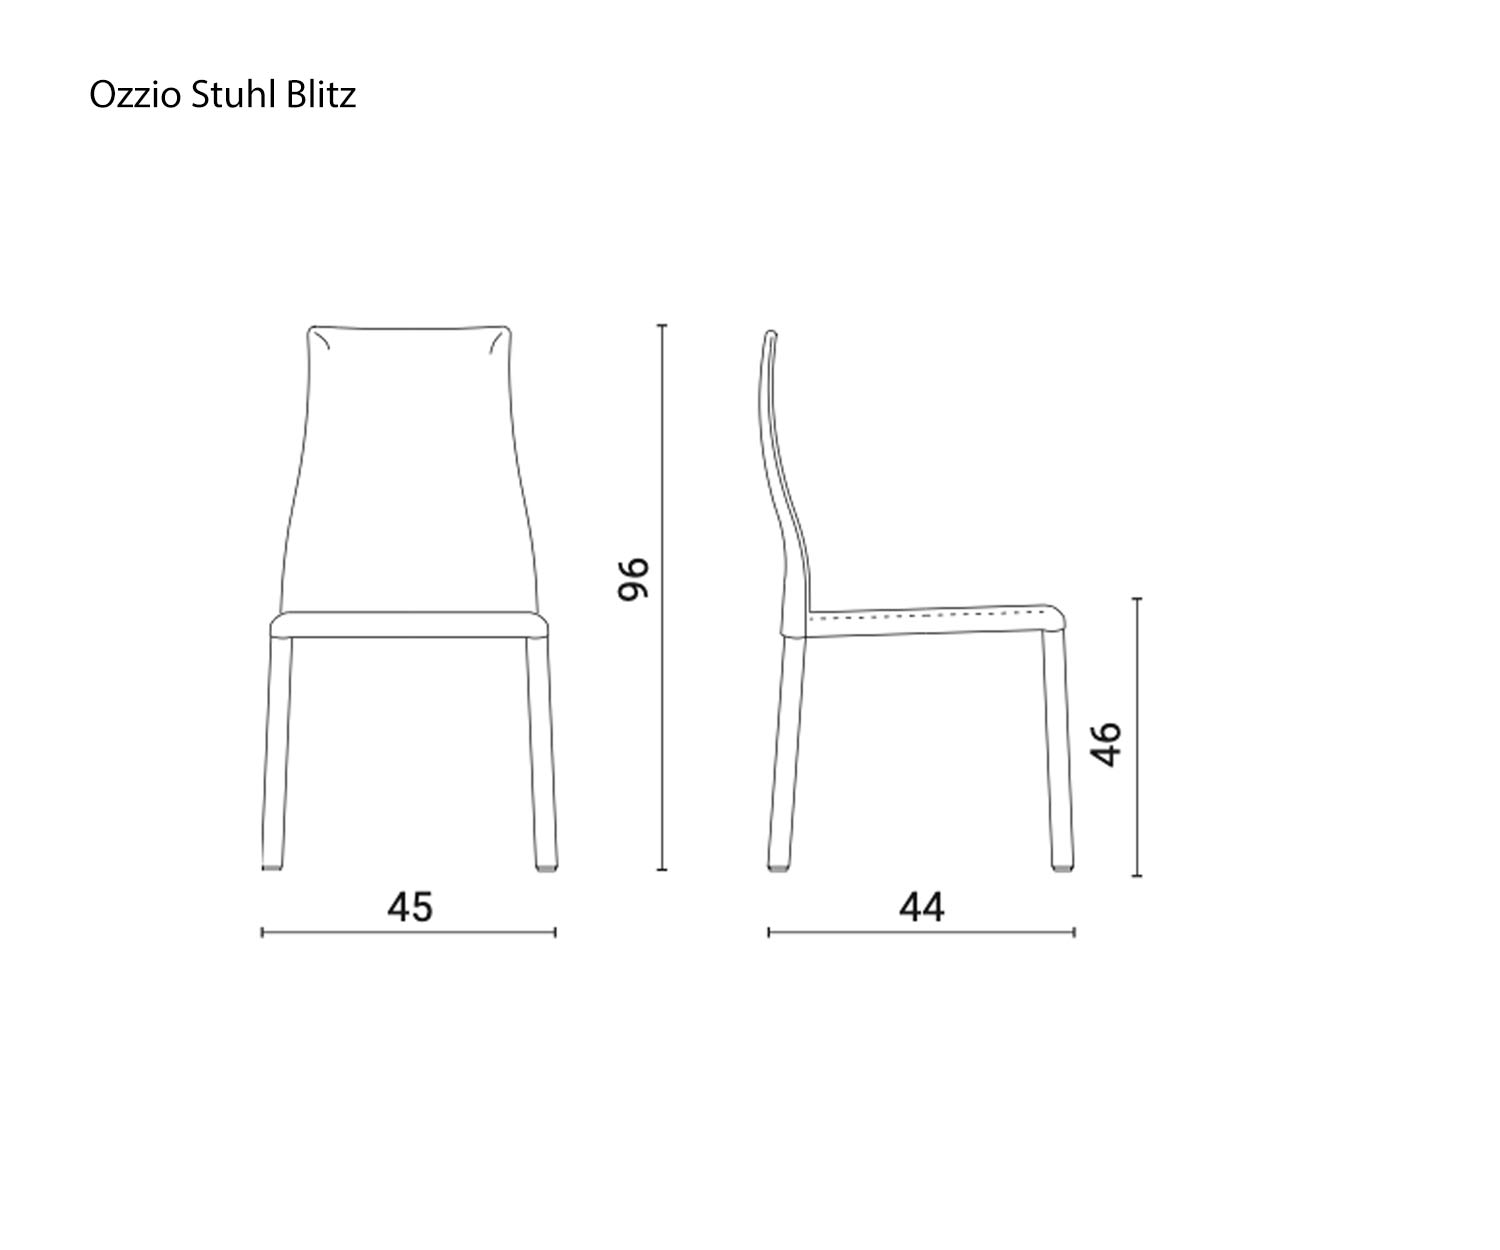 Ozzio Chair Blitz Dimensions Sizes Sizes Sketch